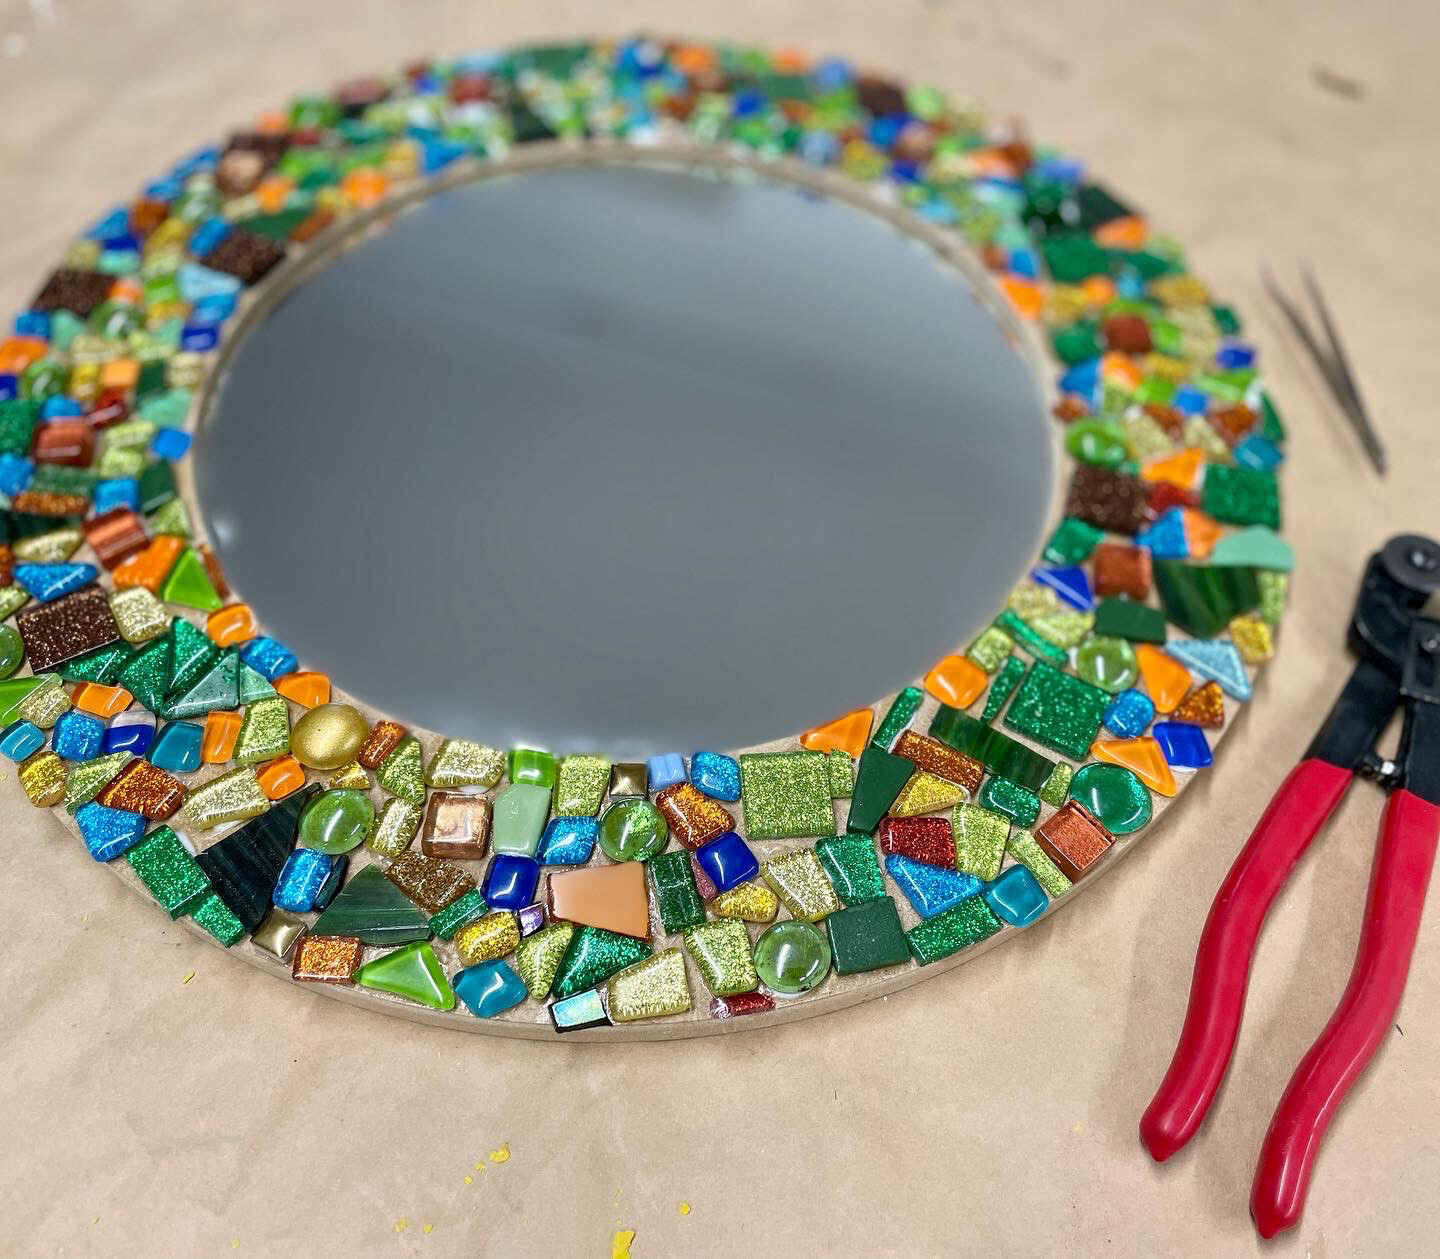 Mosaic Mirror Workshop - Thursday 16th June 10:30am-1pm